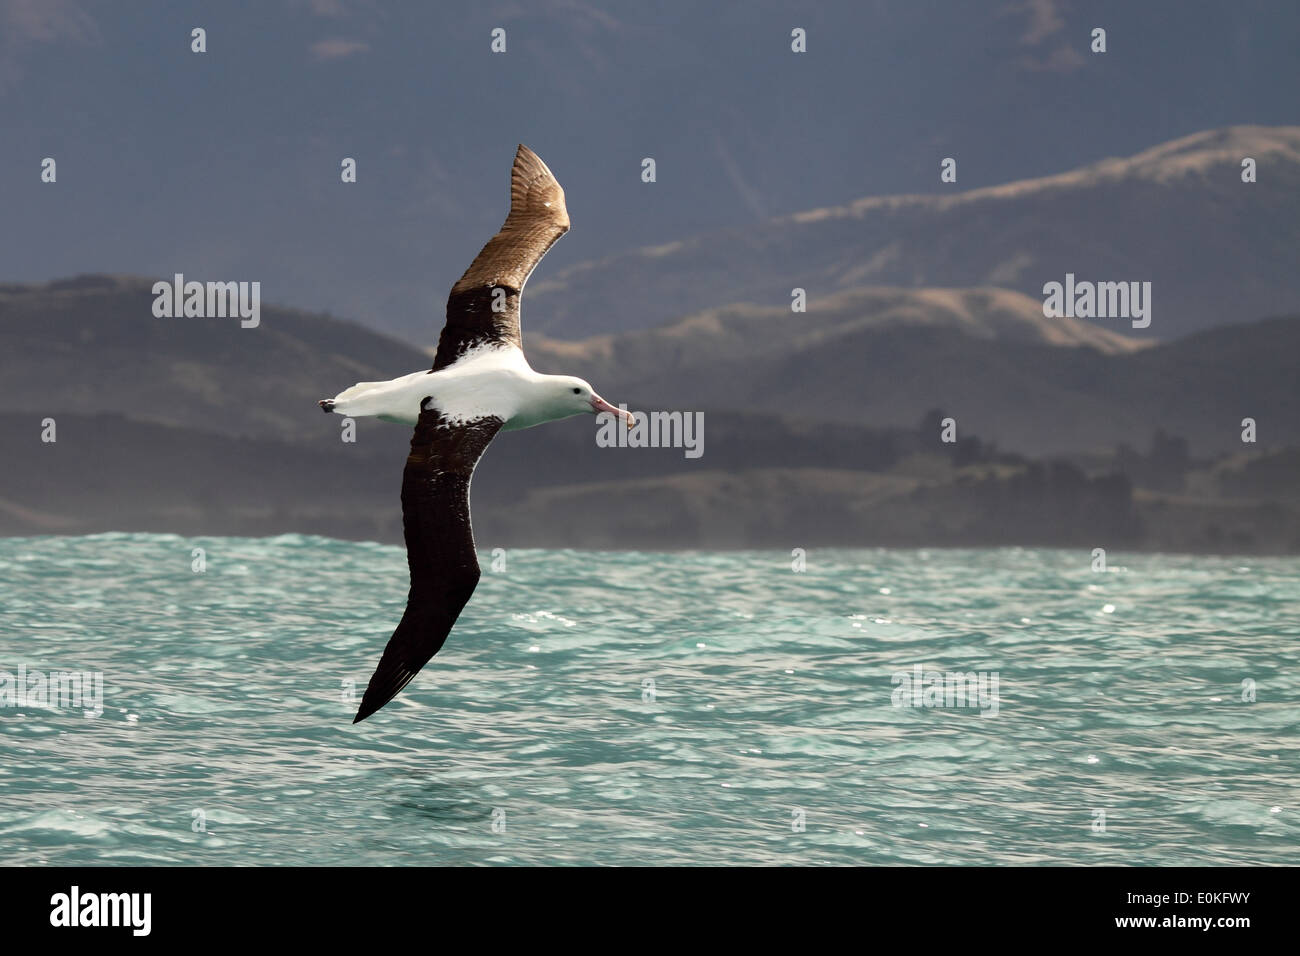 An Albatross in a hanging flight between ocean and mountains. Stock Photo